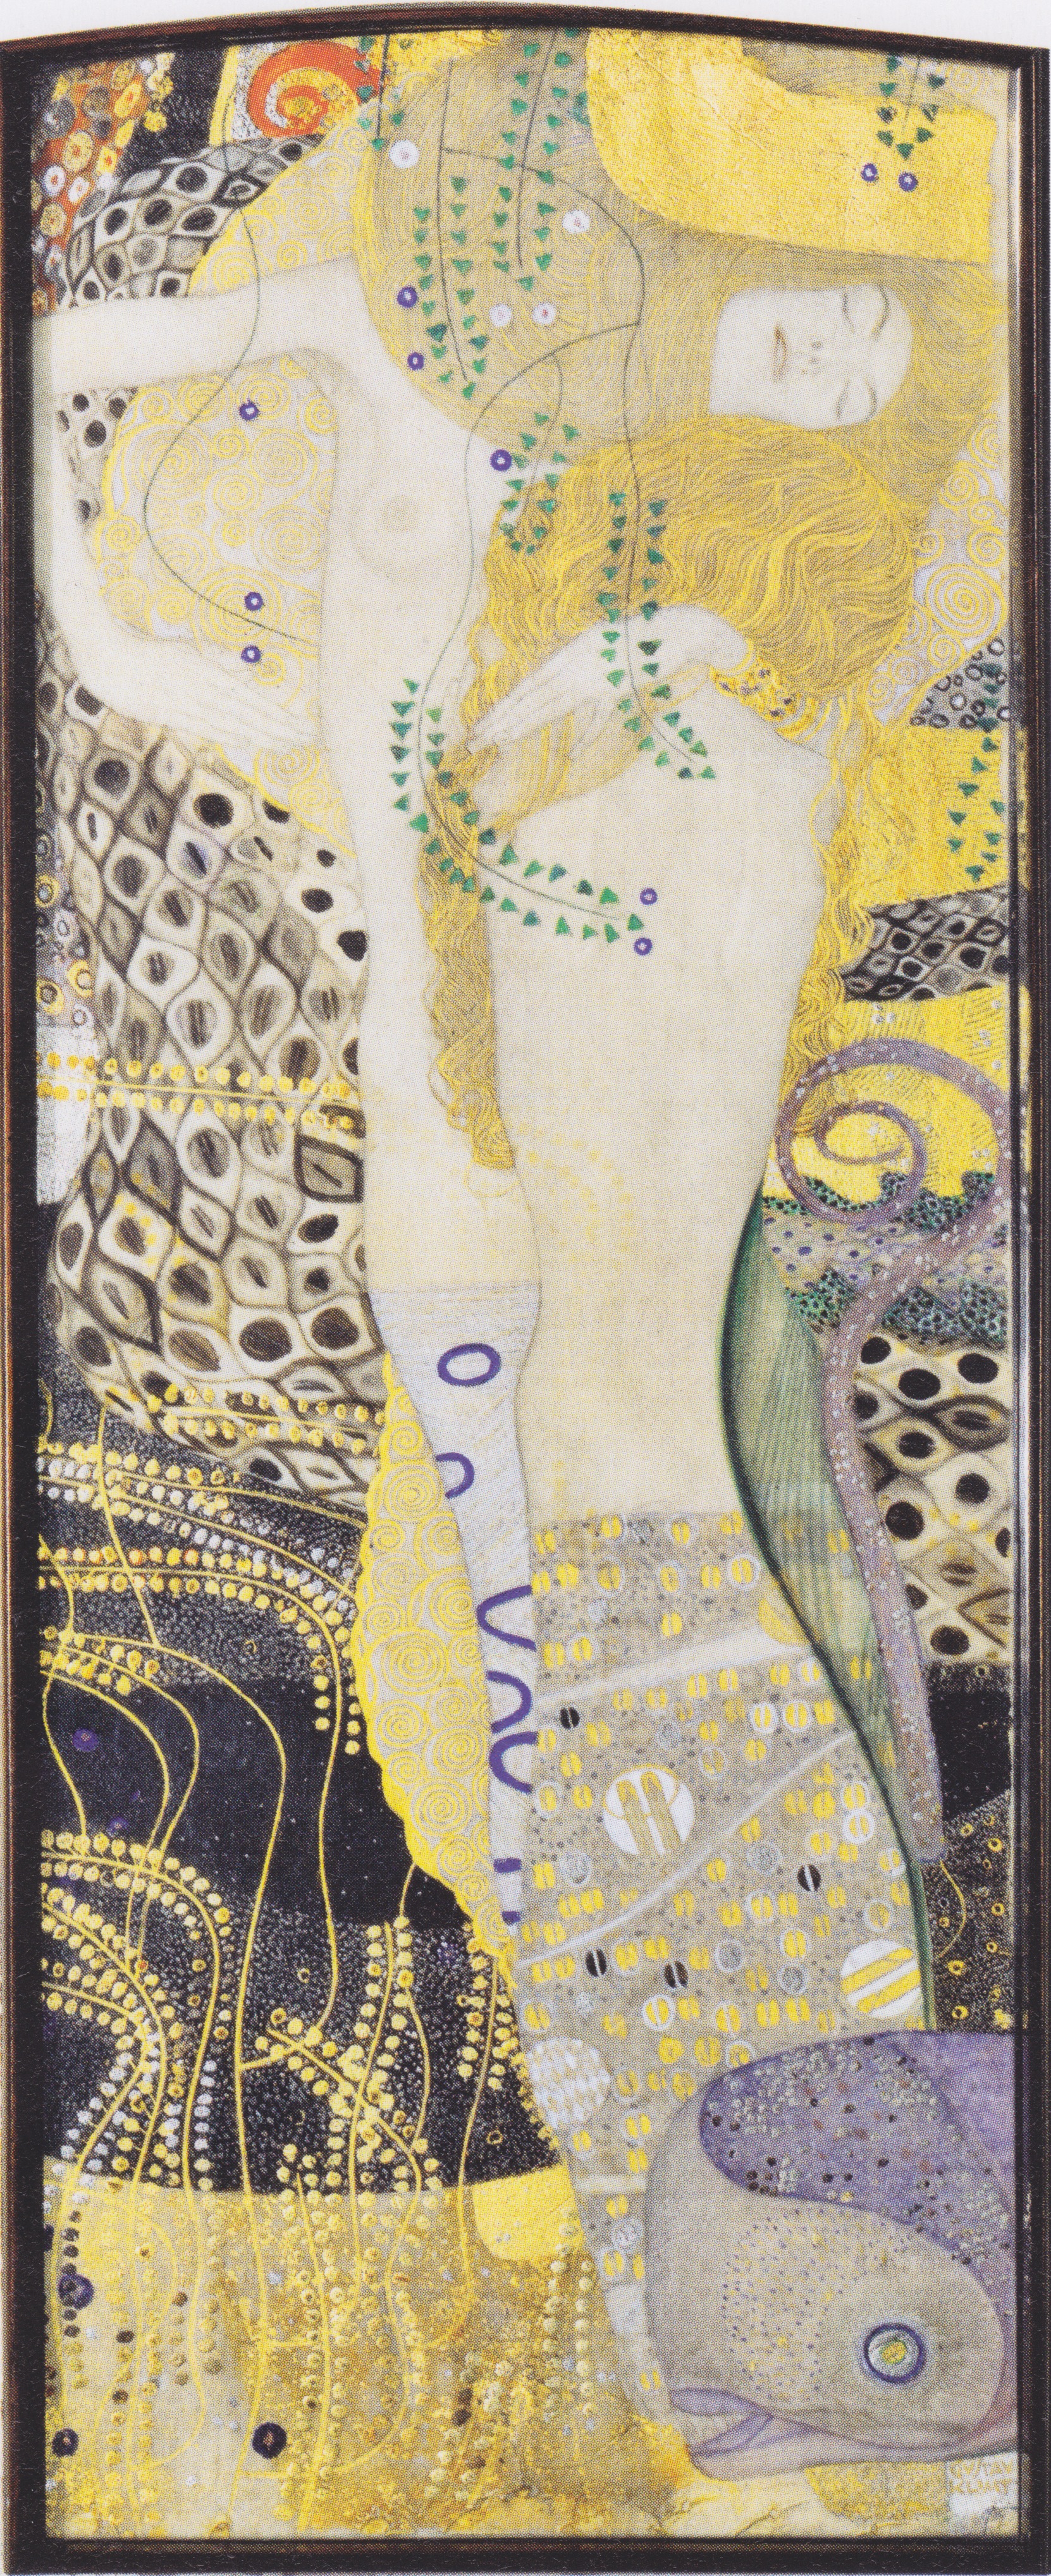 Gustav Klimt - Watersnakes 1907